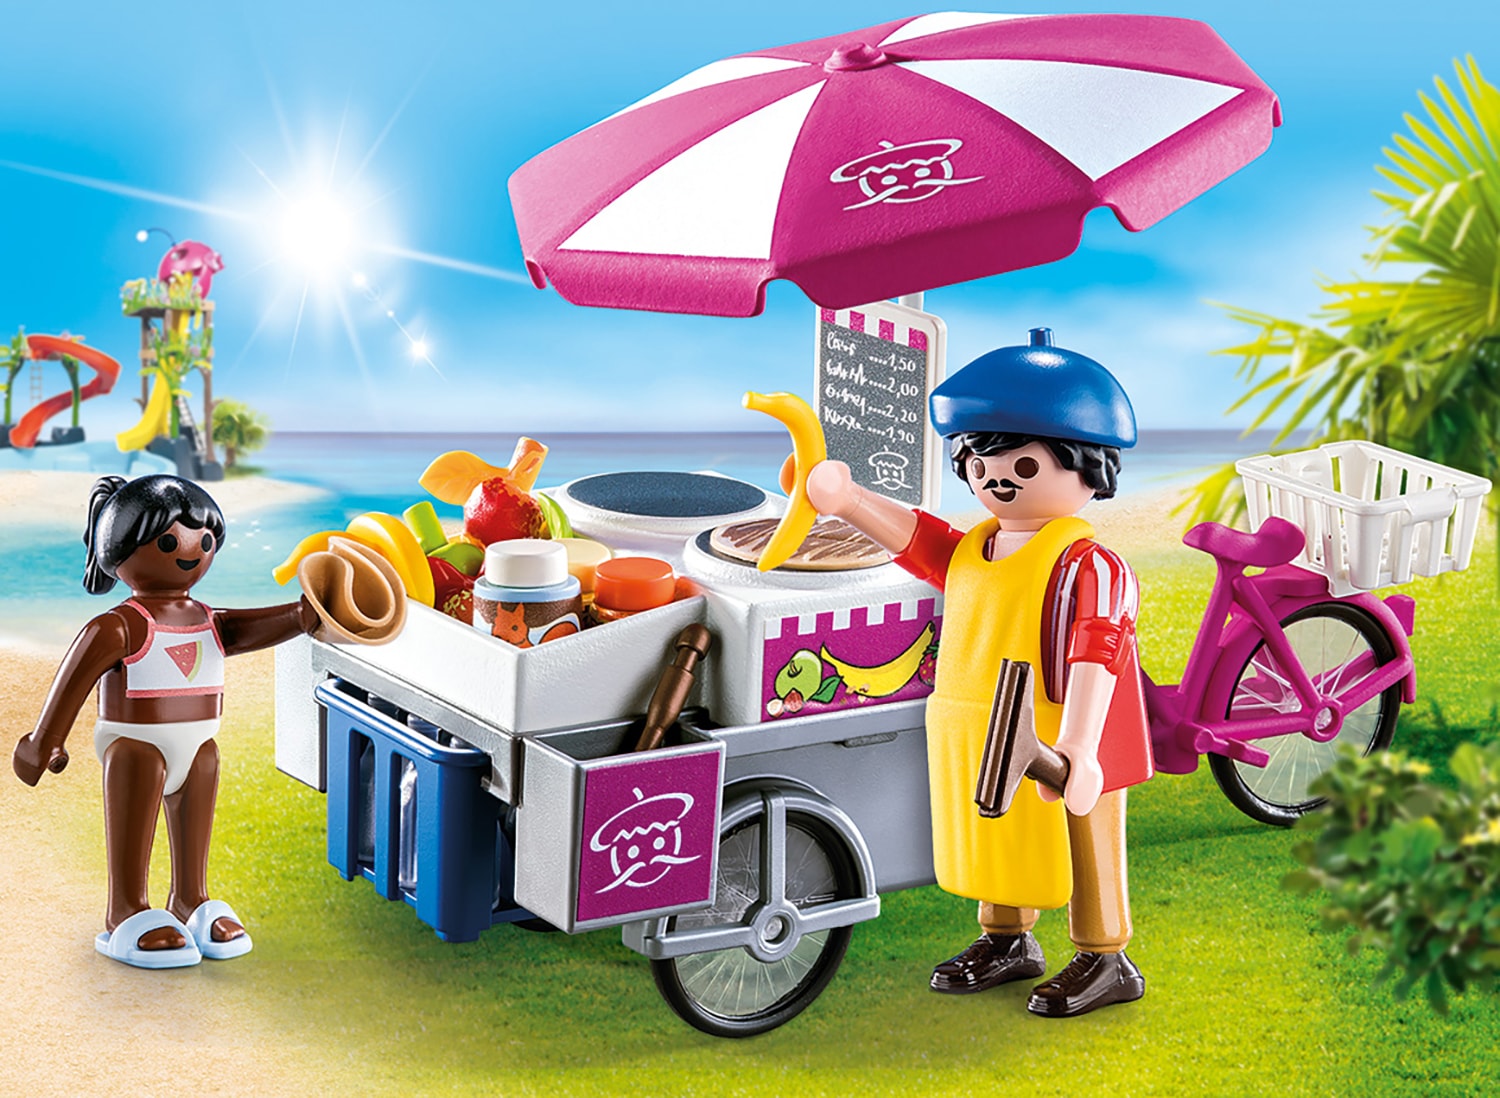 Playmobil® Konstruktions-Spielset »Mobiler CrÃªpes-Verkauf (70614), Family Fun«, (44 St.), Made in Europe